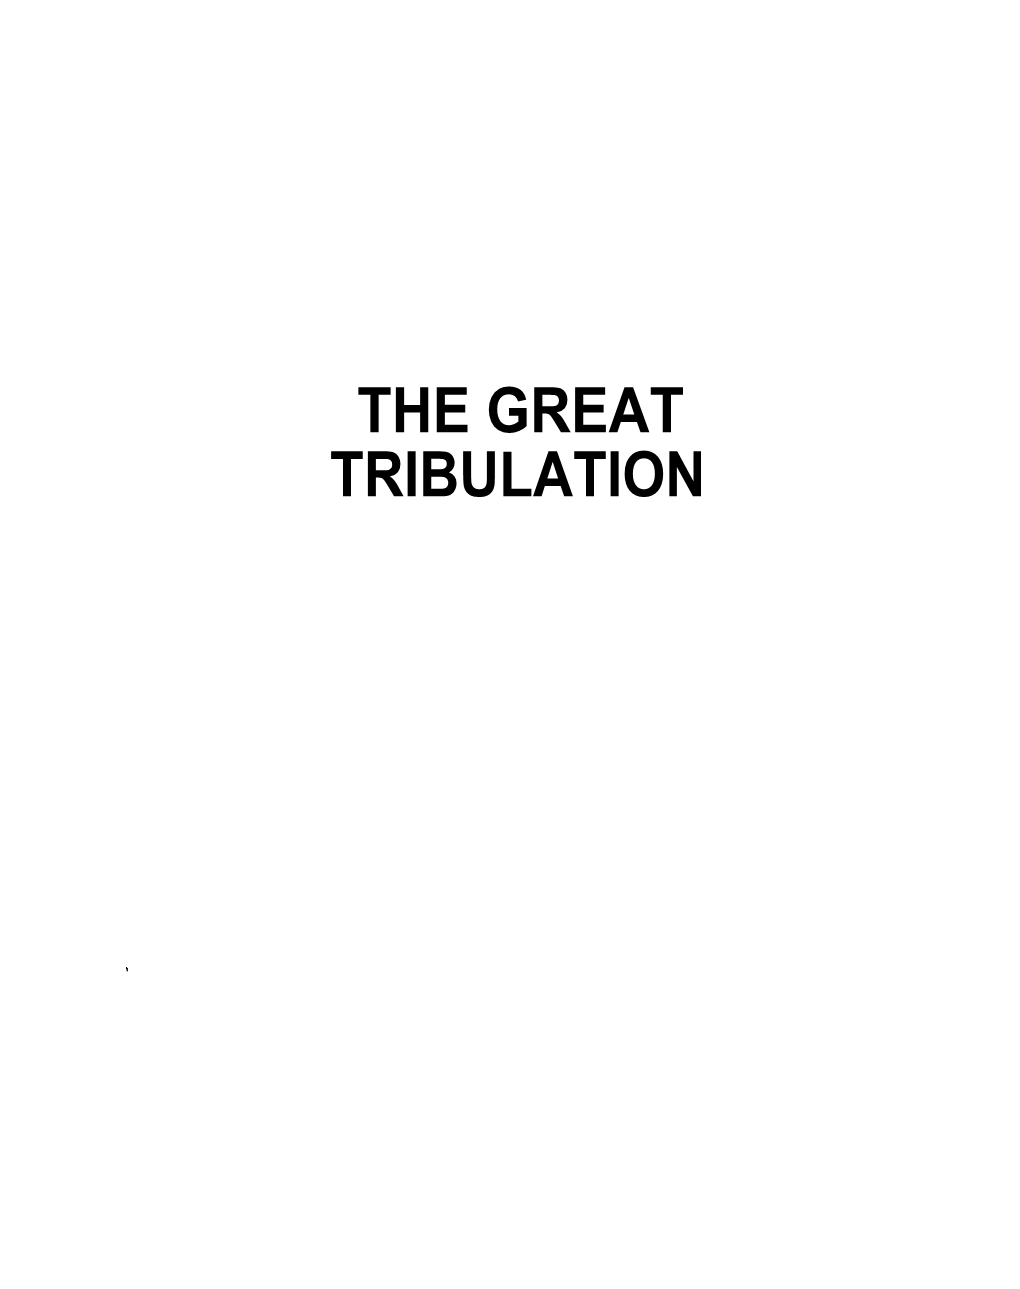 Great Tribulation